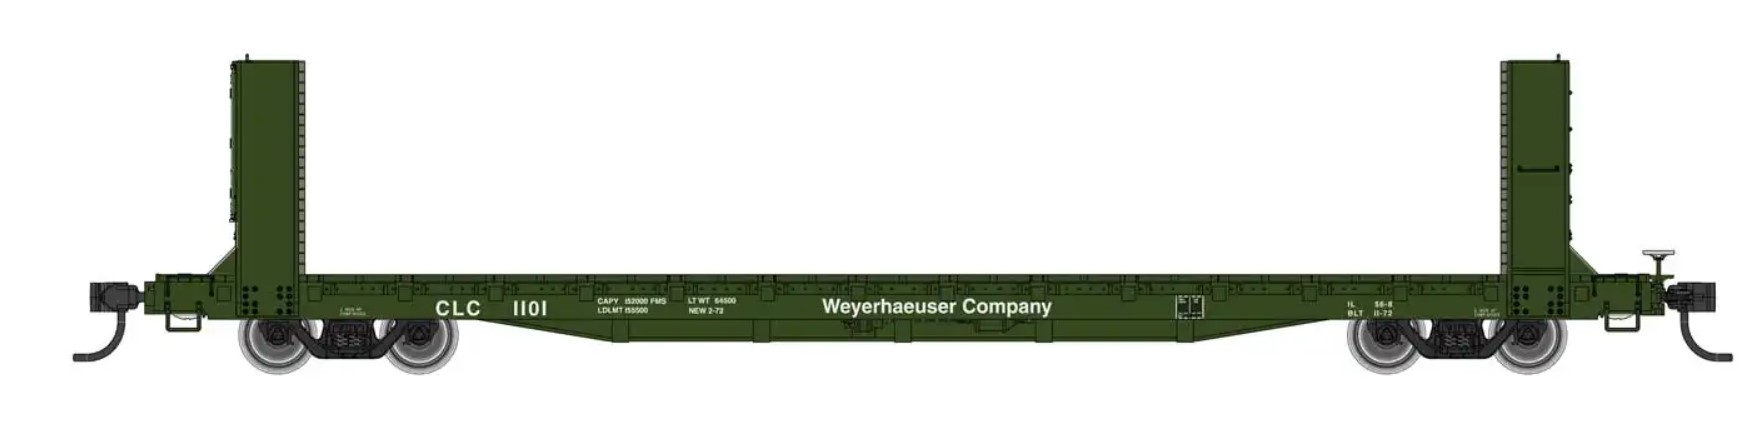 Walthers Mainline HO 5825 60ft Pullman-Standard Bulkhead Flatcar - Ready to Run -- Weyerhauser #1101